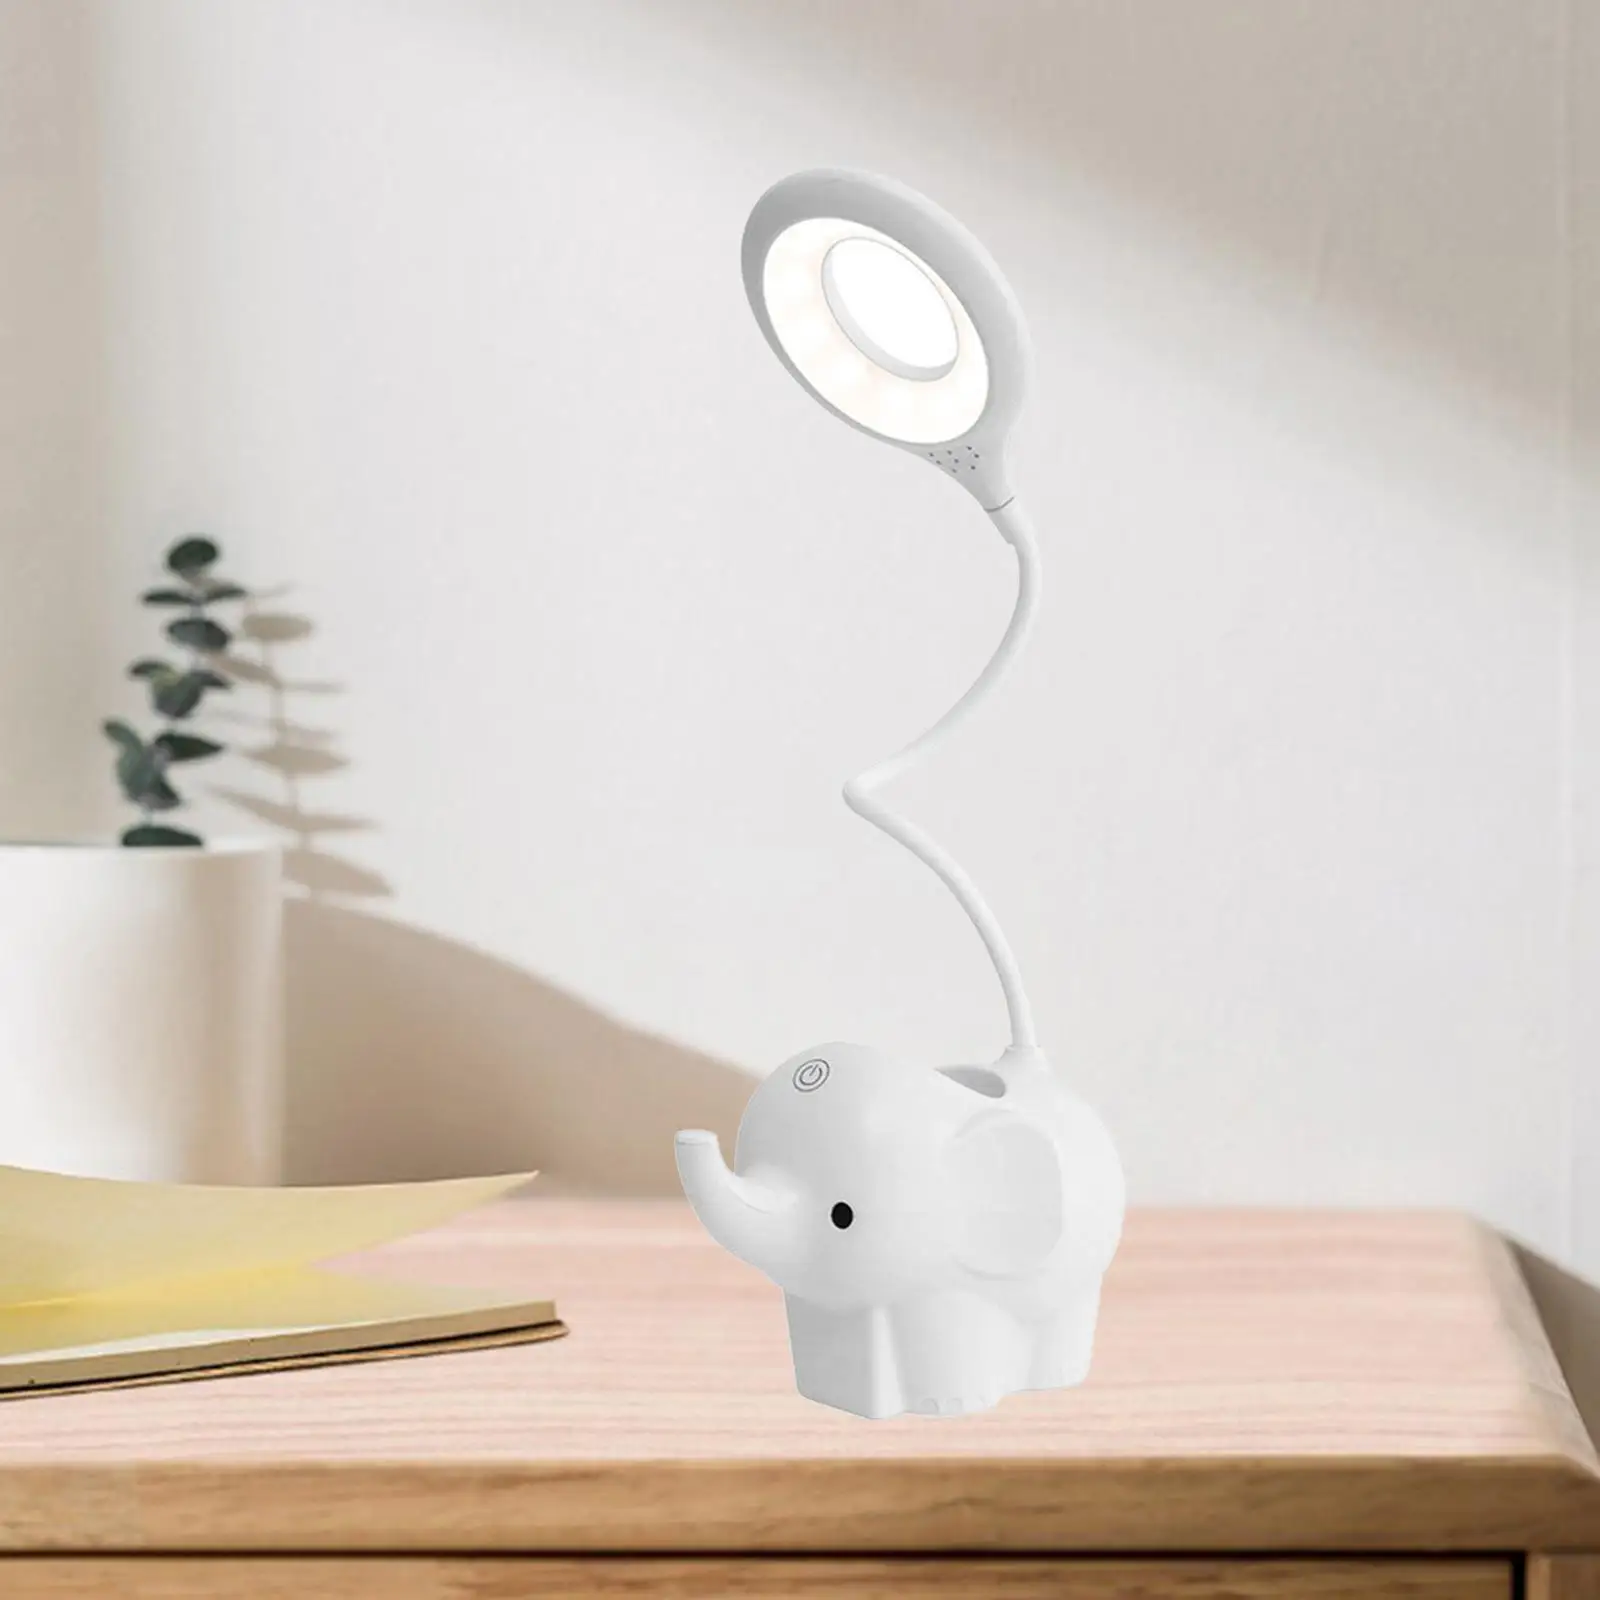 Elephant LED Table Desk Lamp Night Light 3 Stage Dimming w/Phone Holder